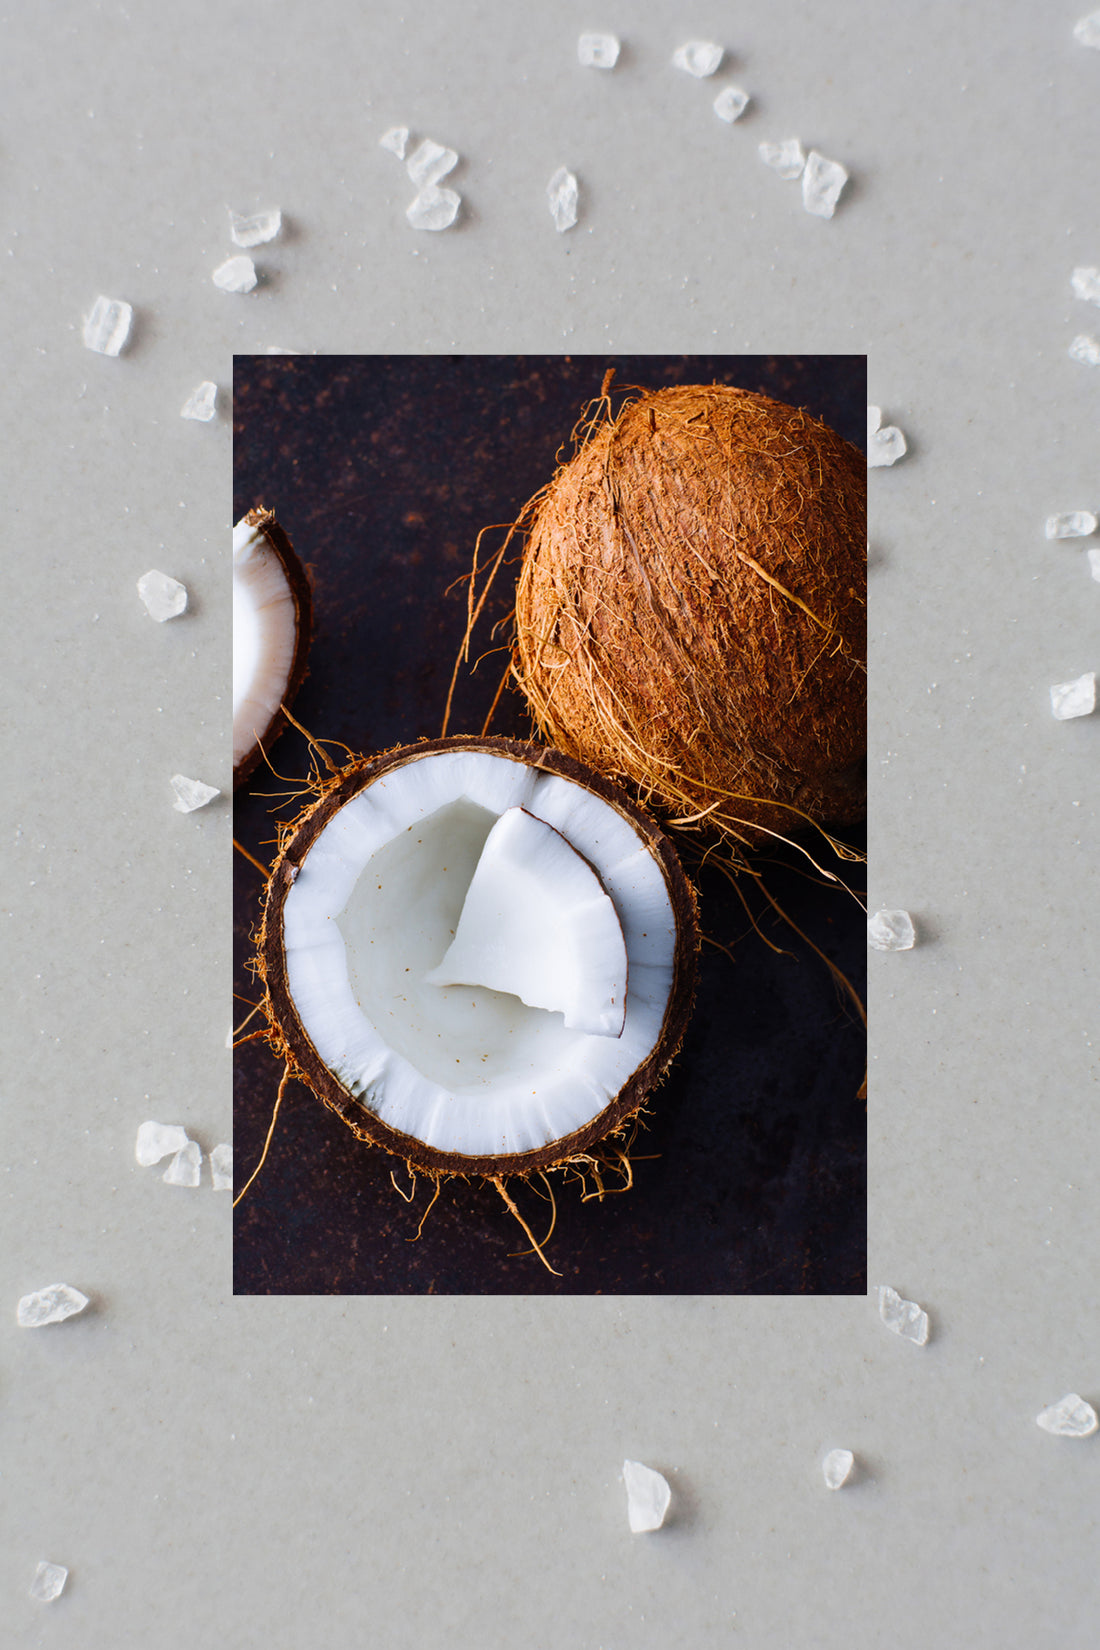 Raw half coconut next whole coconut with large sea salt pieces